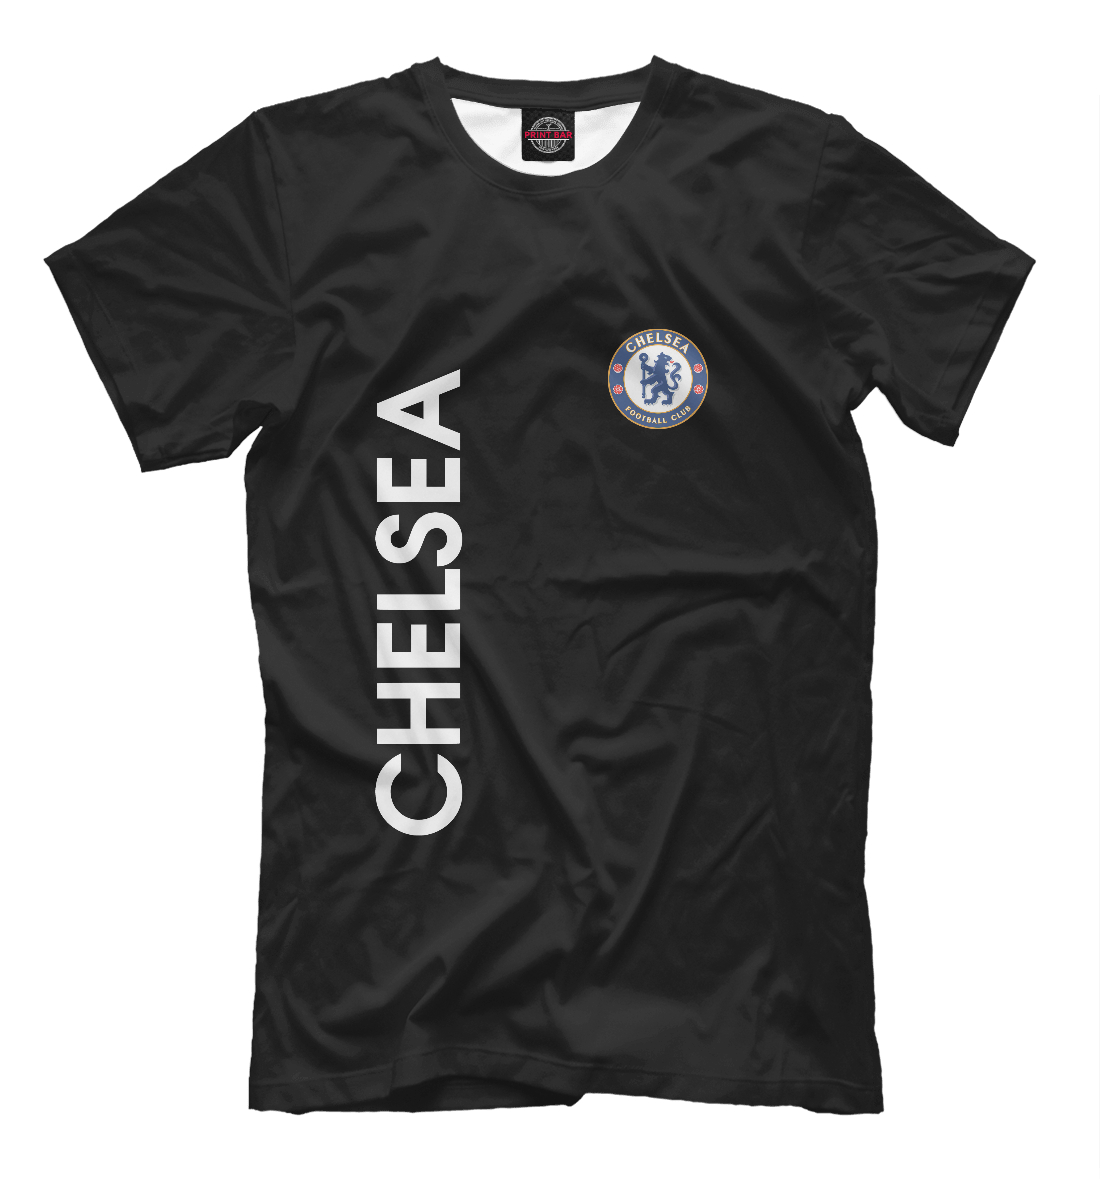 Футболка Chelsea для мужчин, артикул: CHL-345279-fut-2mp